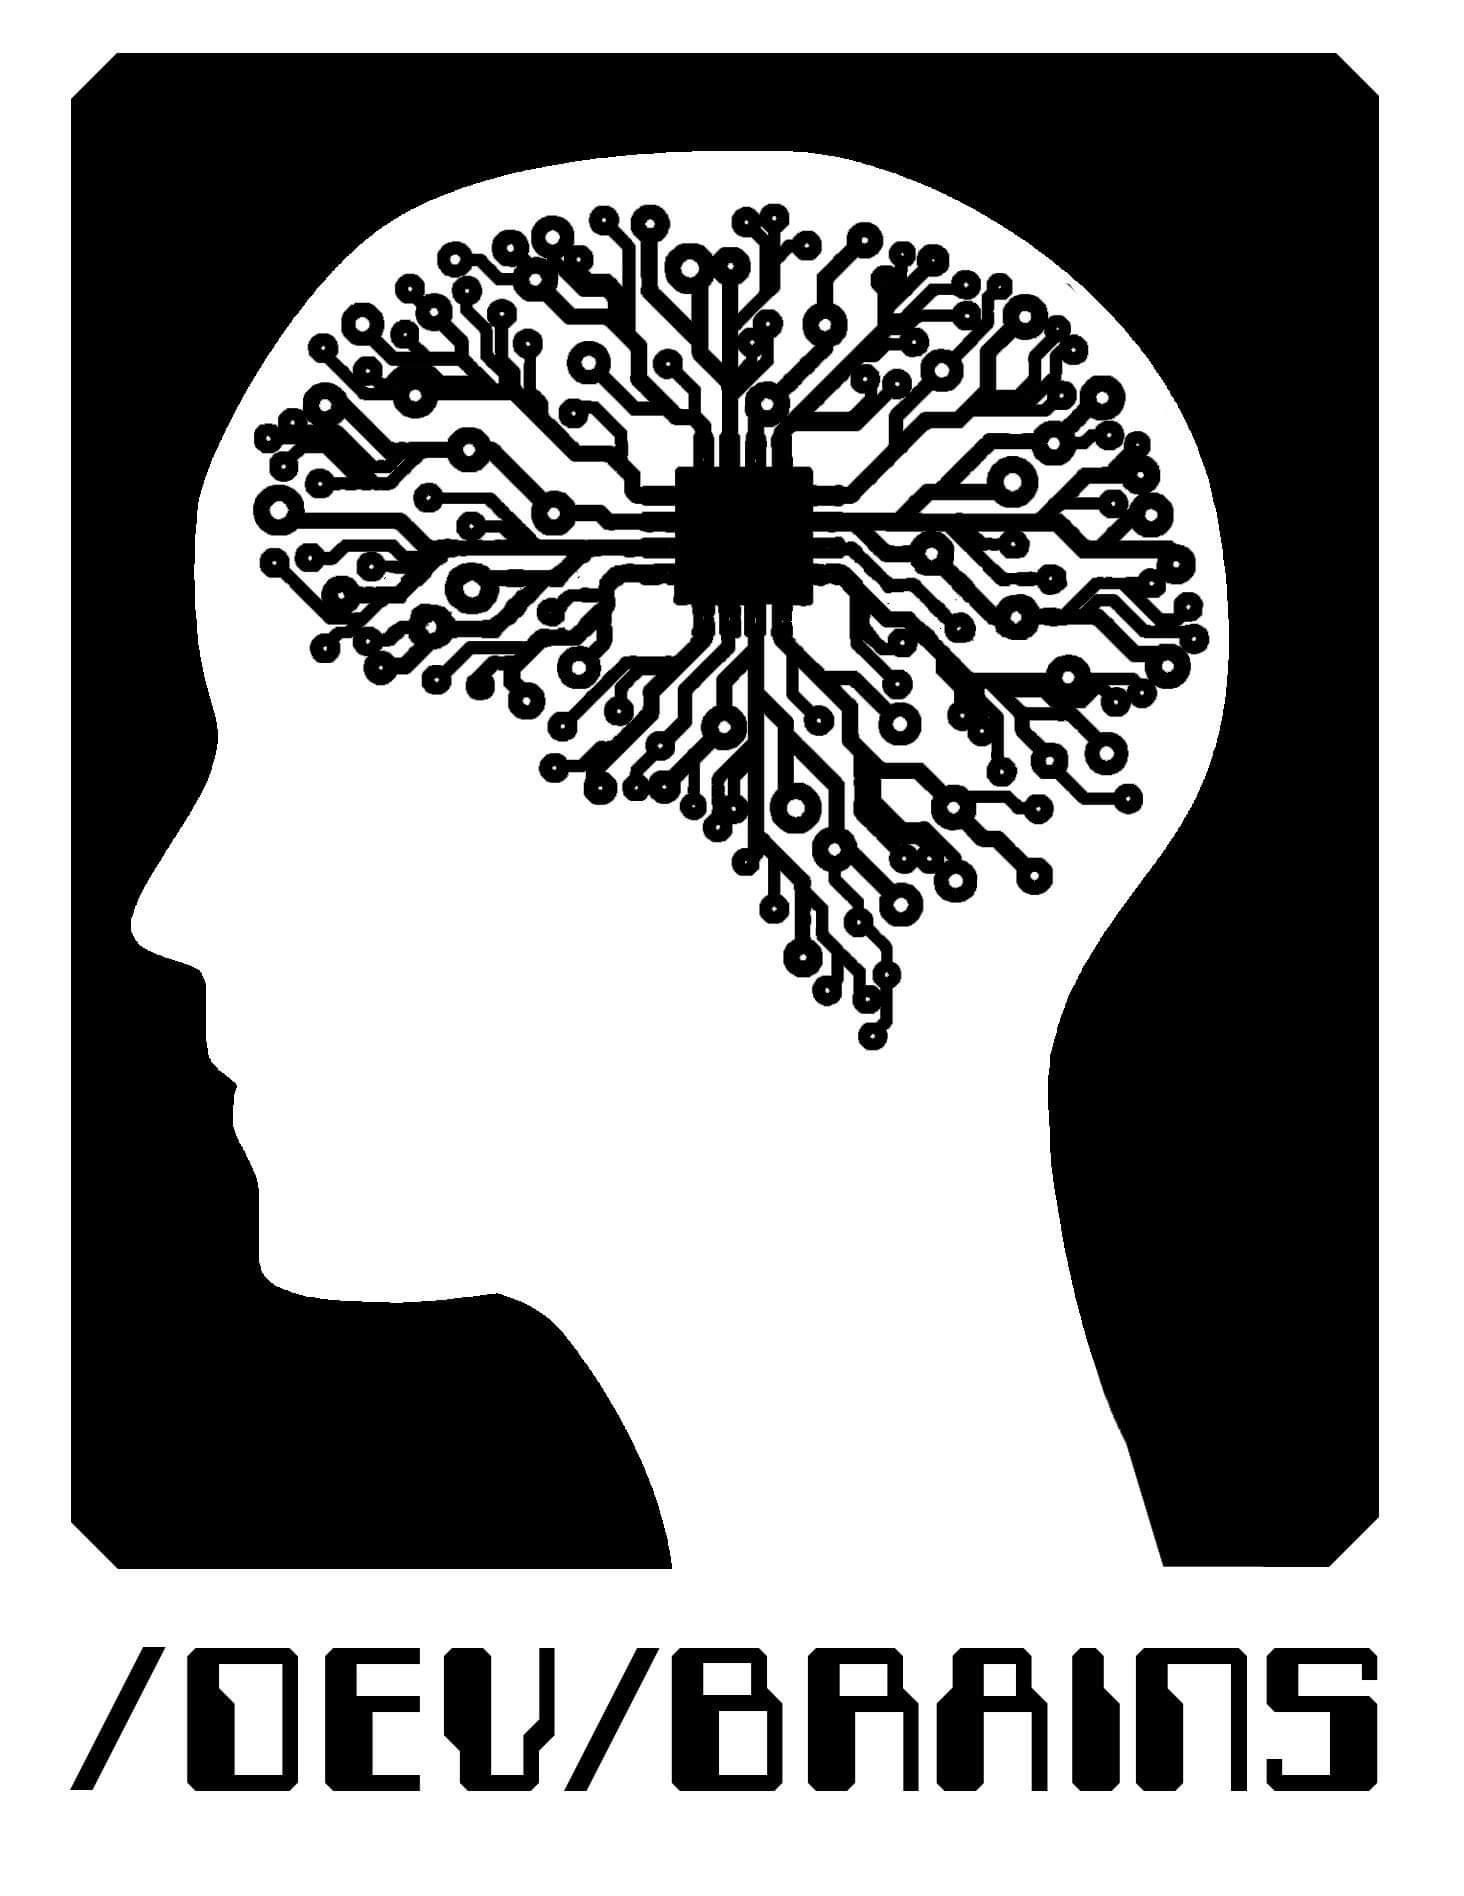 Company logo for /dev/brains